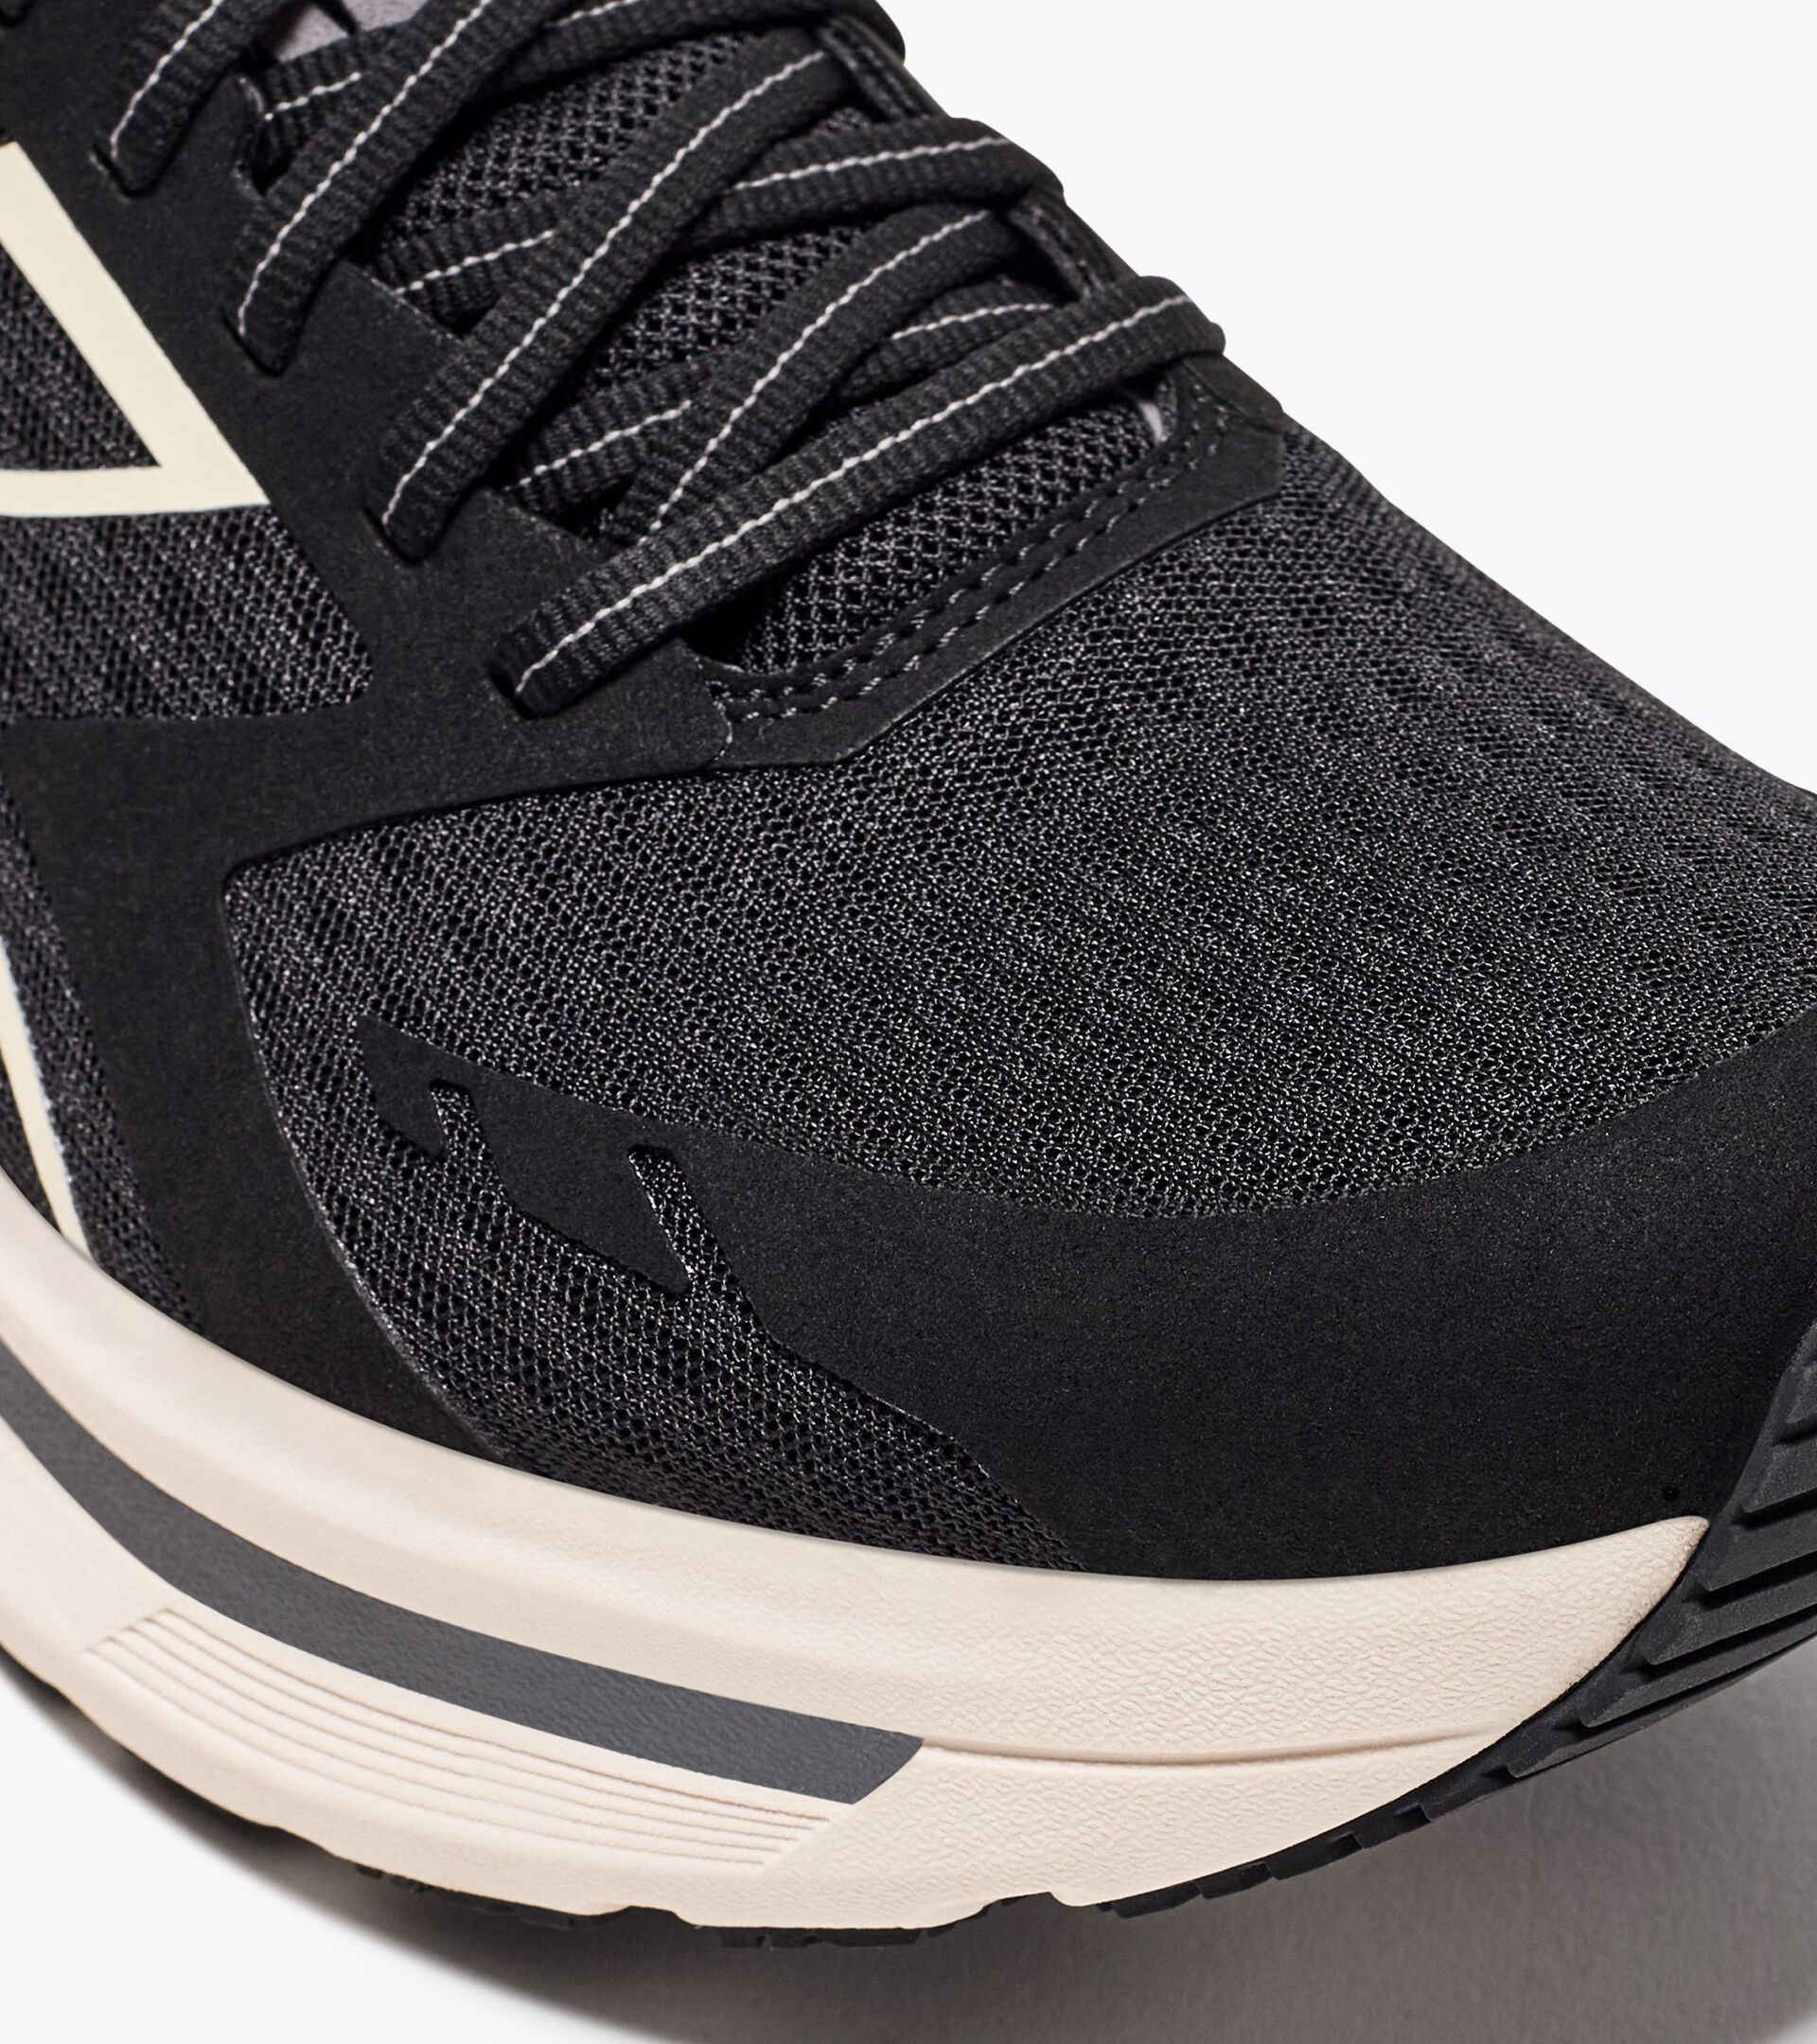 Running shoe - Comfort and stability - Men's CELLULA BLACK/WHISPER WHITE - Diadora